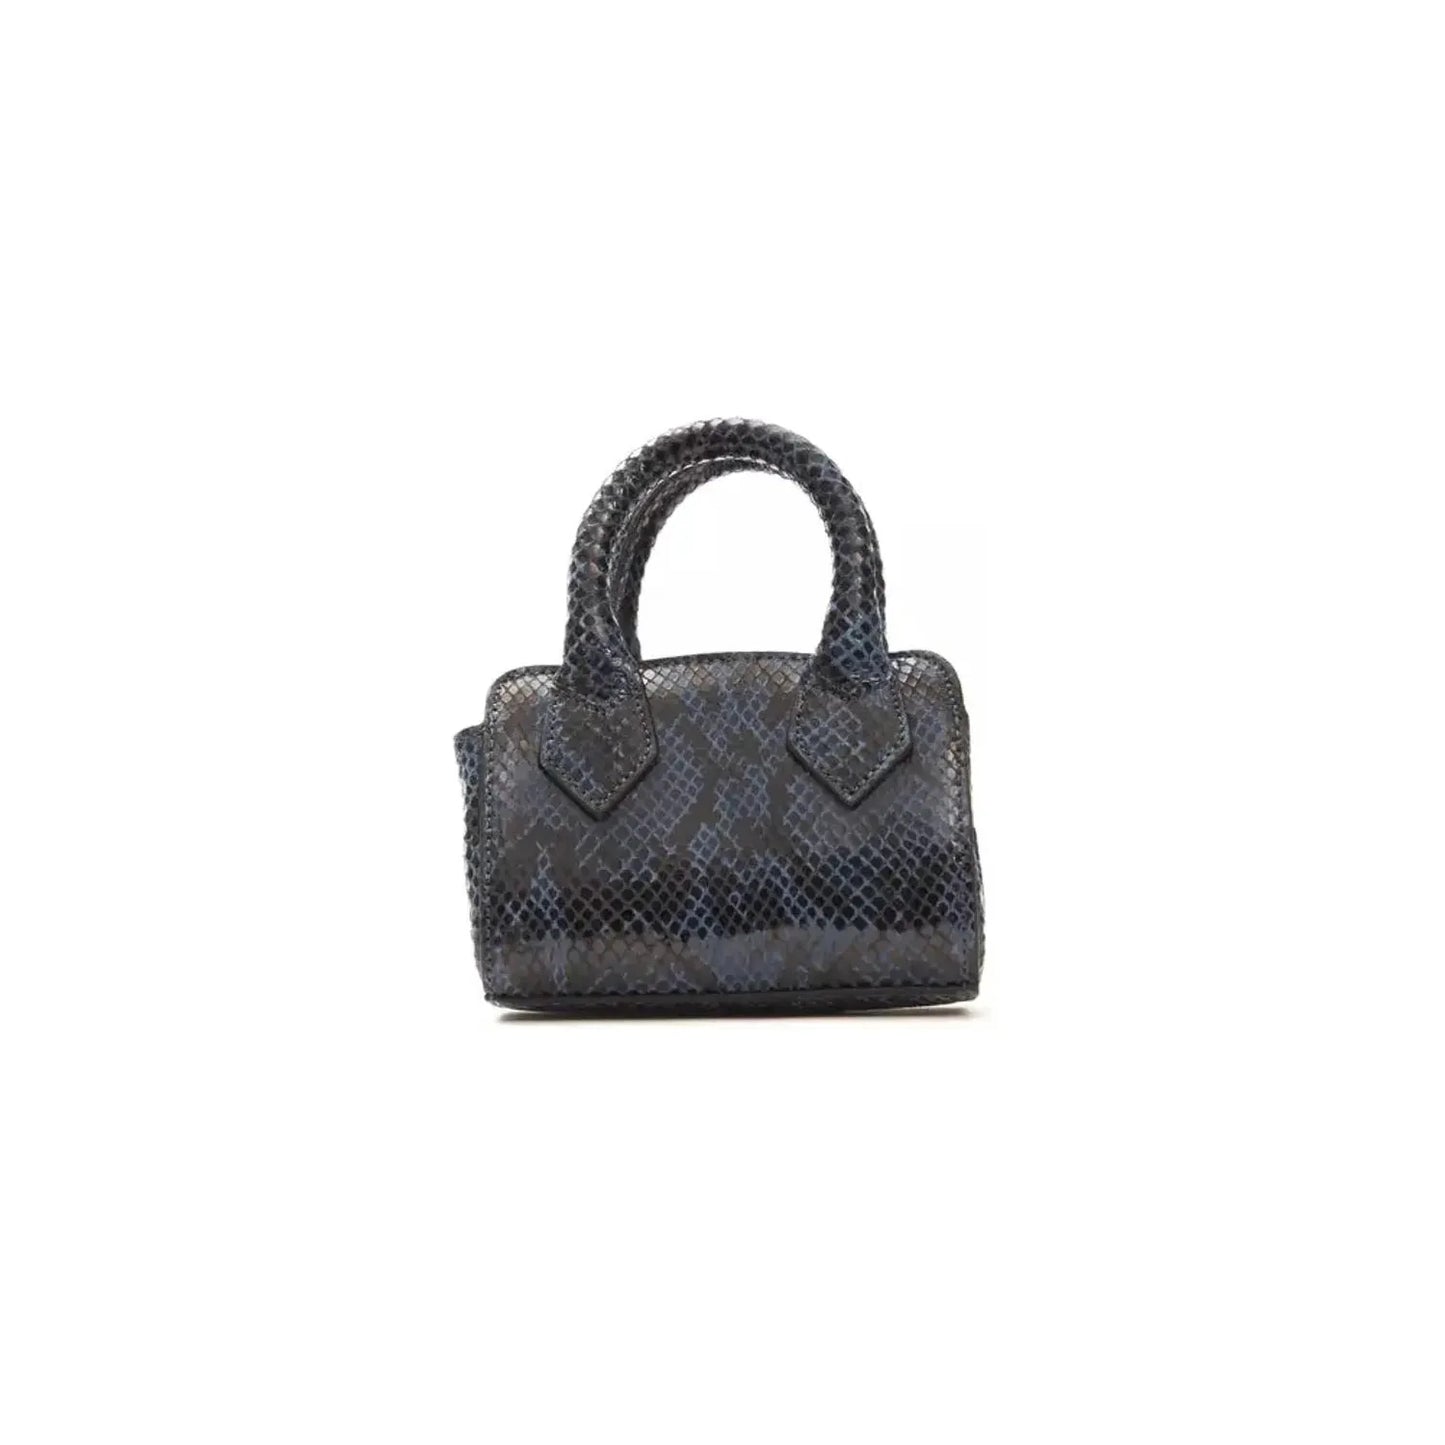 Pompei Donatella Chic Python Print Mini Tote Elegance blu-navy-handbag-1 Handbags, Wallets & Cases stock_product_image_5784_1880093847-22-bf20da8e-7d6.webp